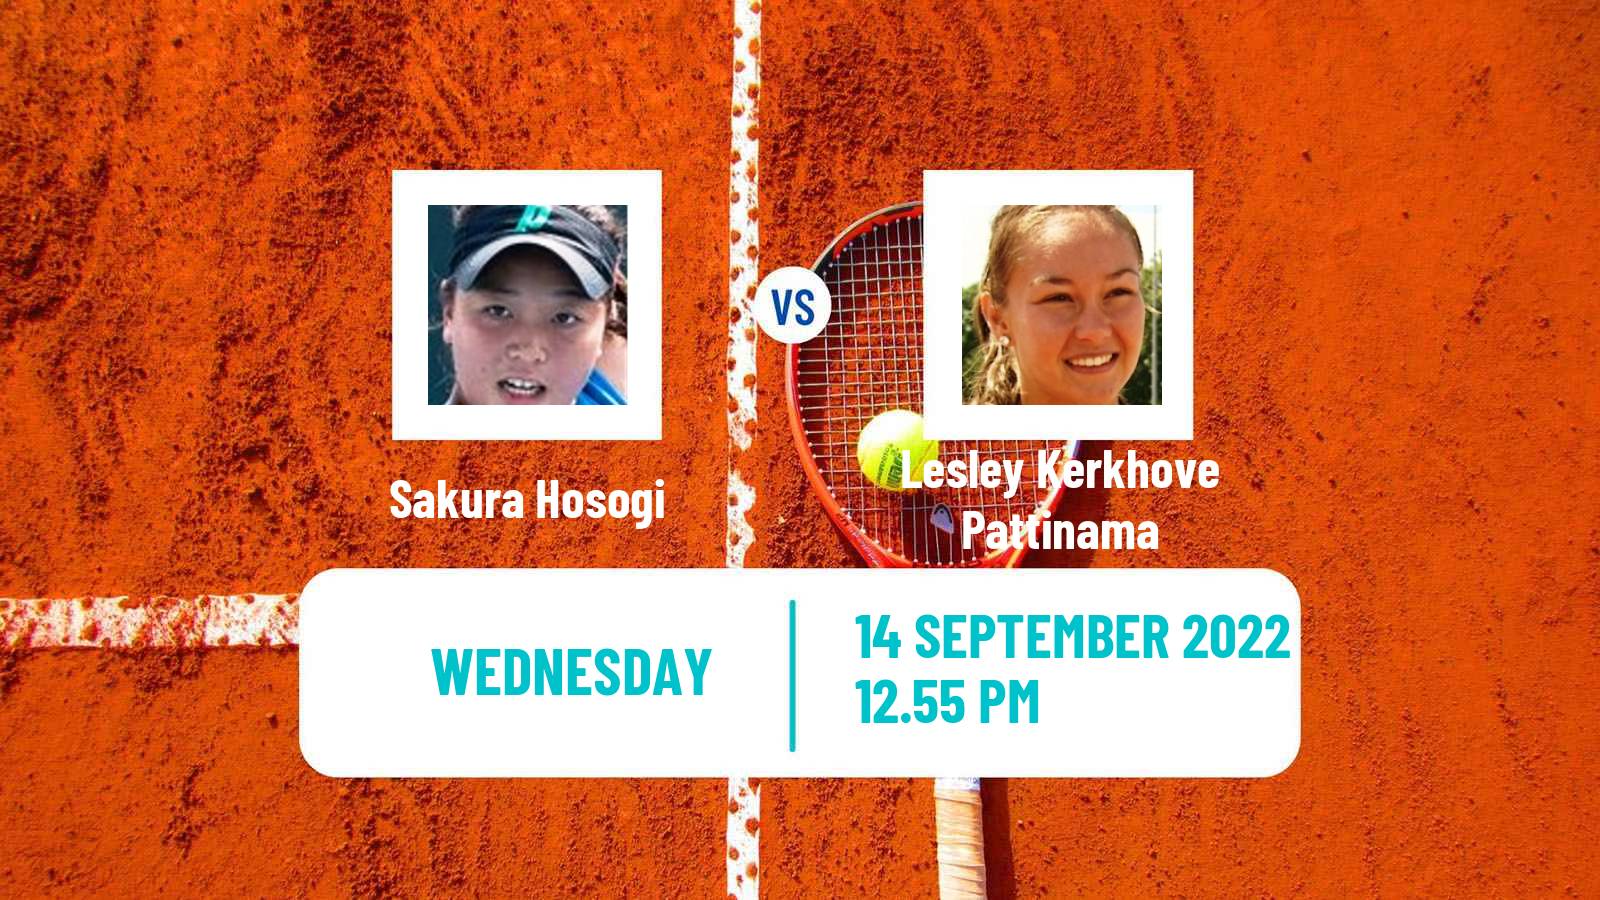 Tennis ITF Tournaments Sakura Hosogi - Lesley Kerkhove Pattinama